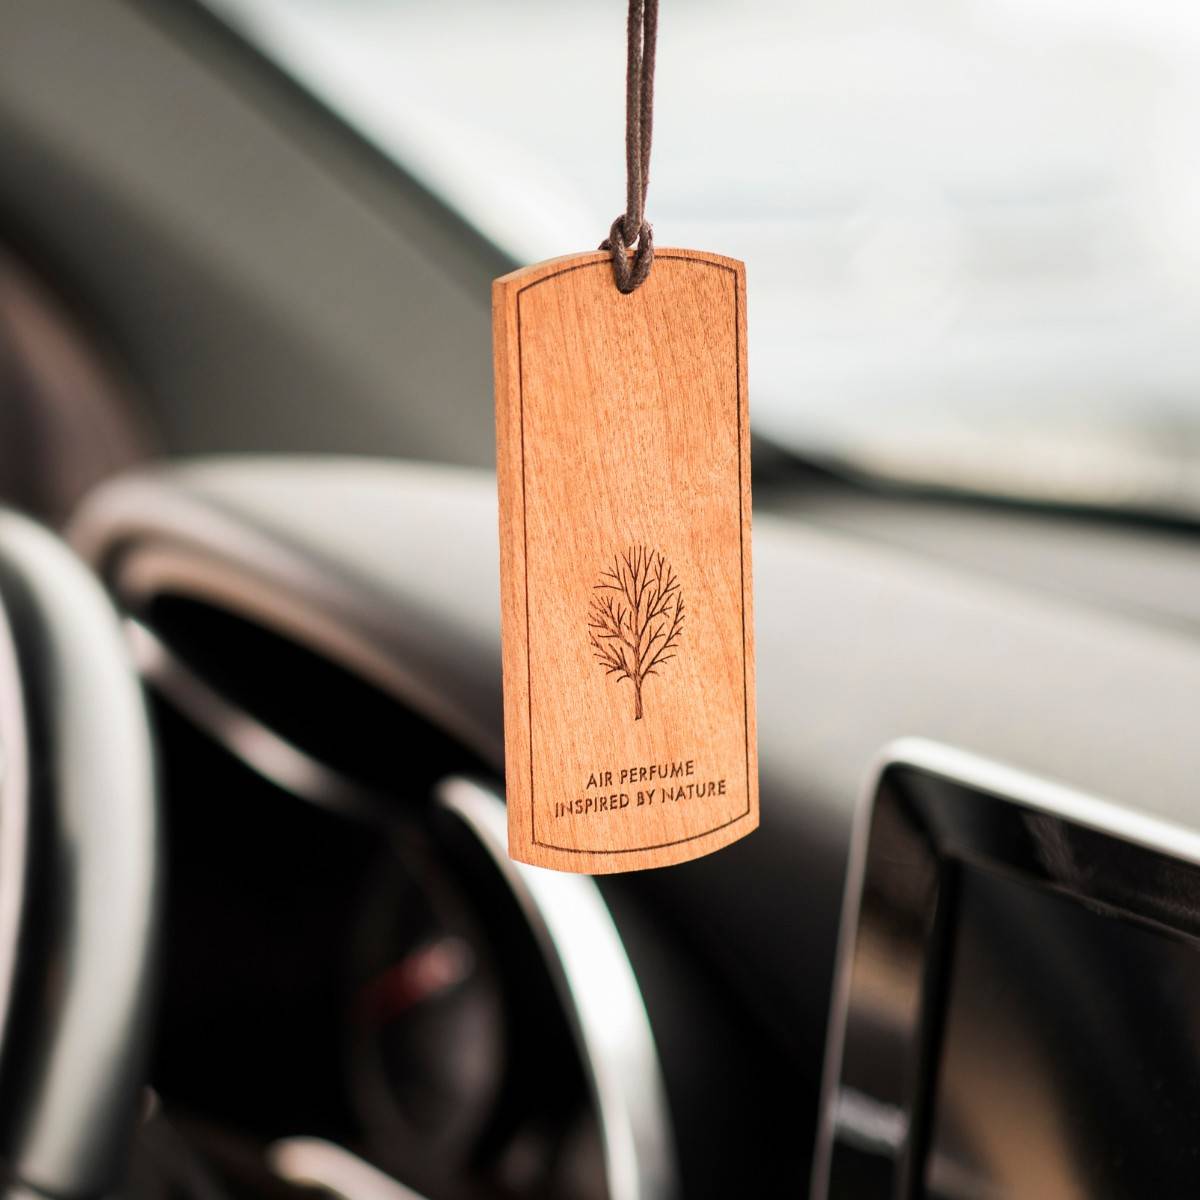 Evos wooden car air freshener - Samurai thumb